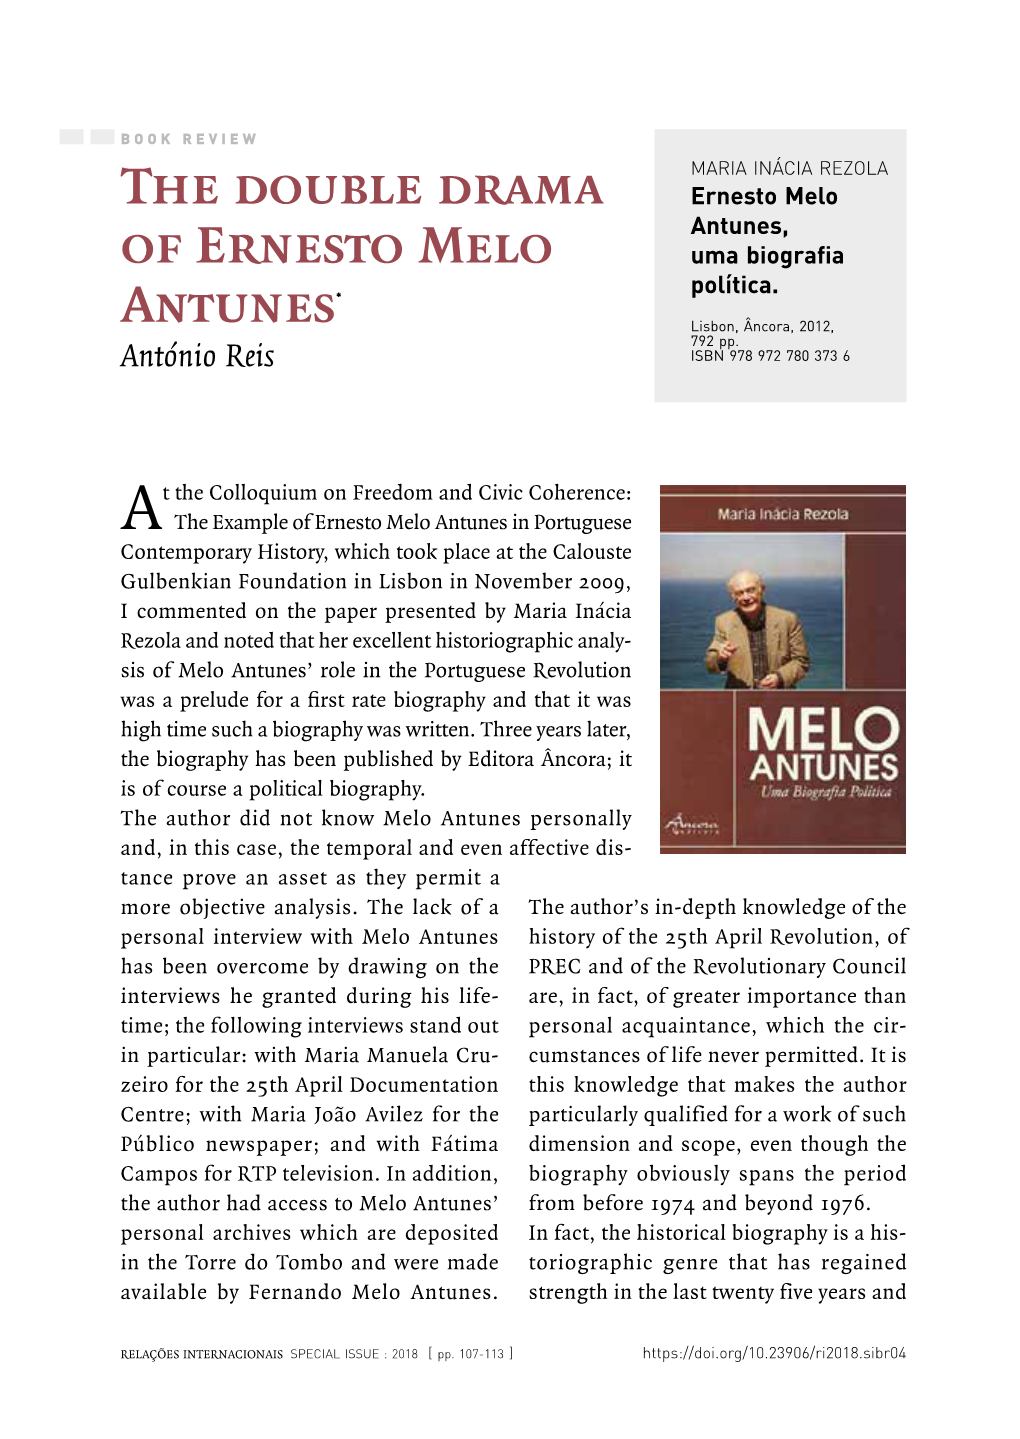 The Double Drama of Ernesto Melo Antunes*